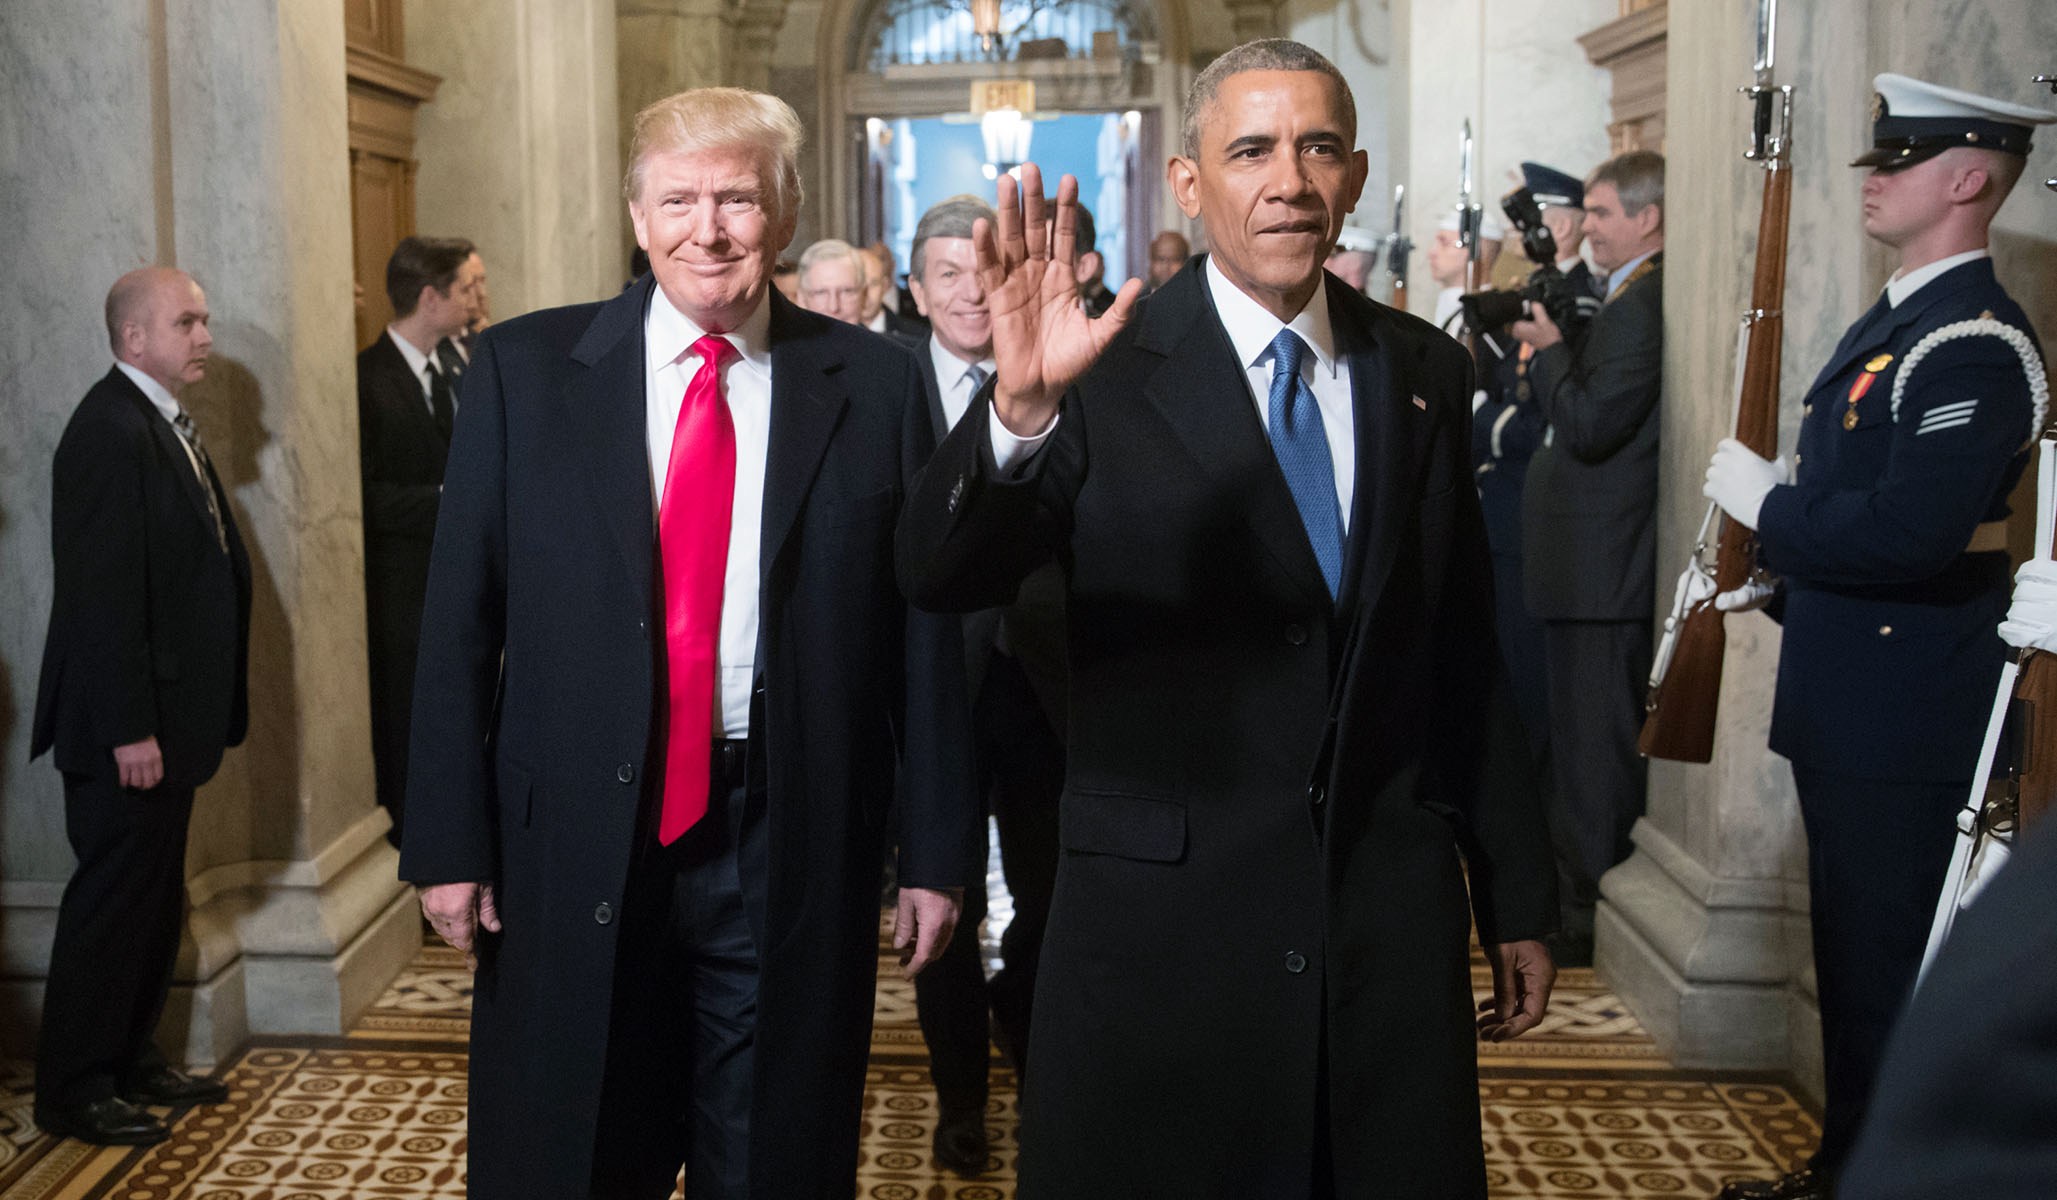 resident-elect Donald Trump, left, and President Barack Obama